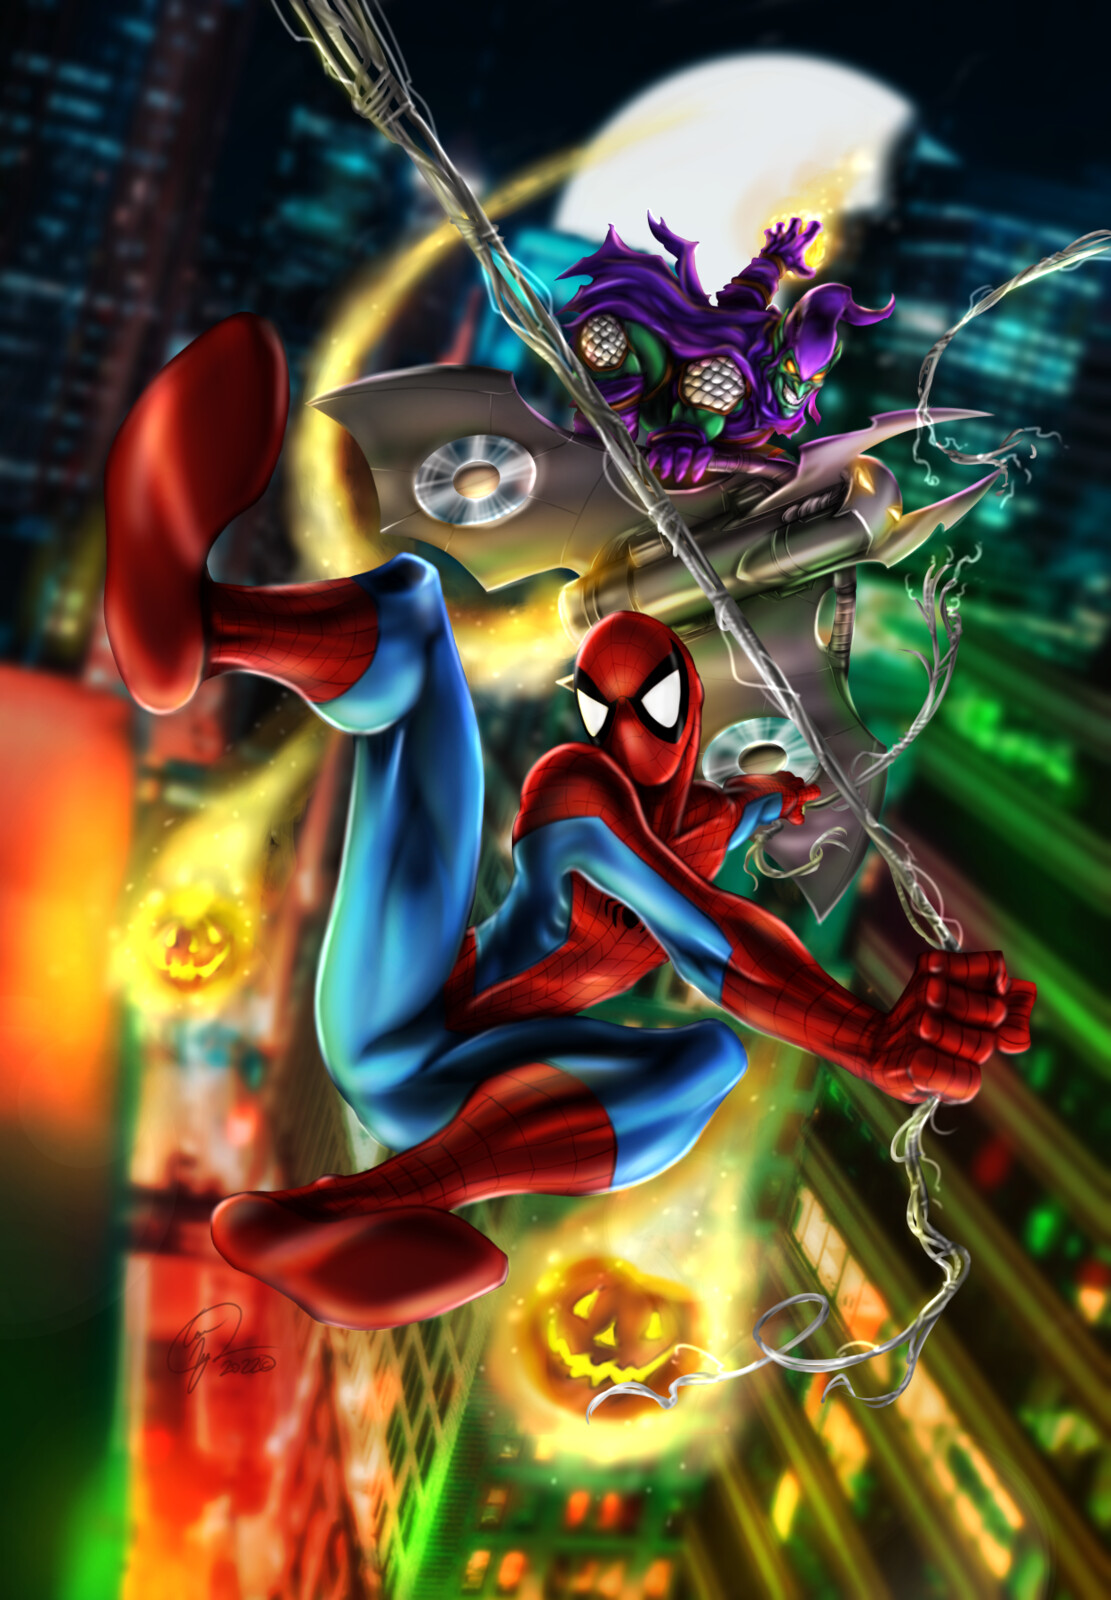 The Amazing Spider-Man vs The Hobgoblin